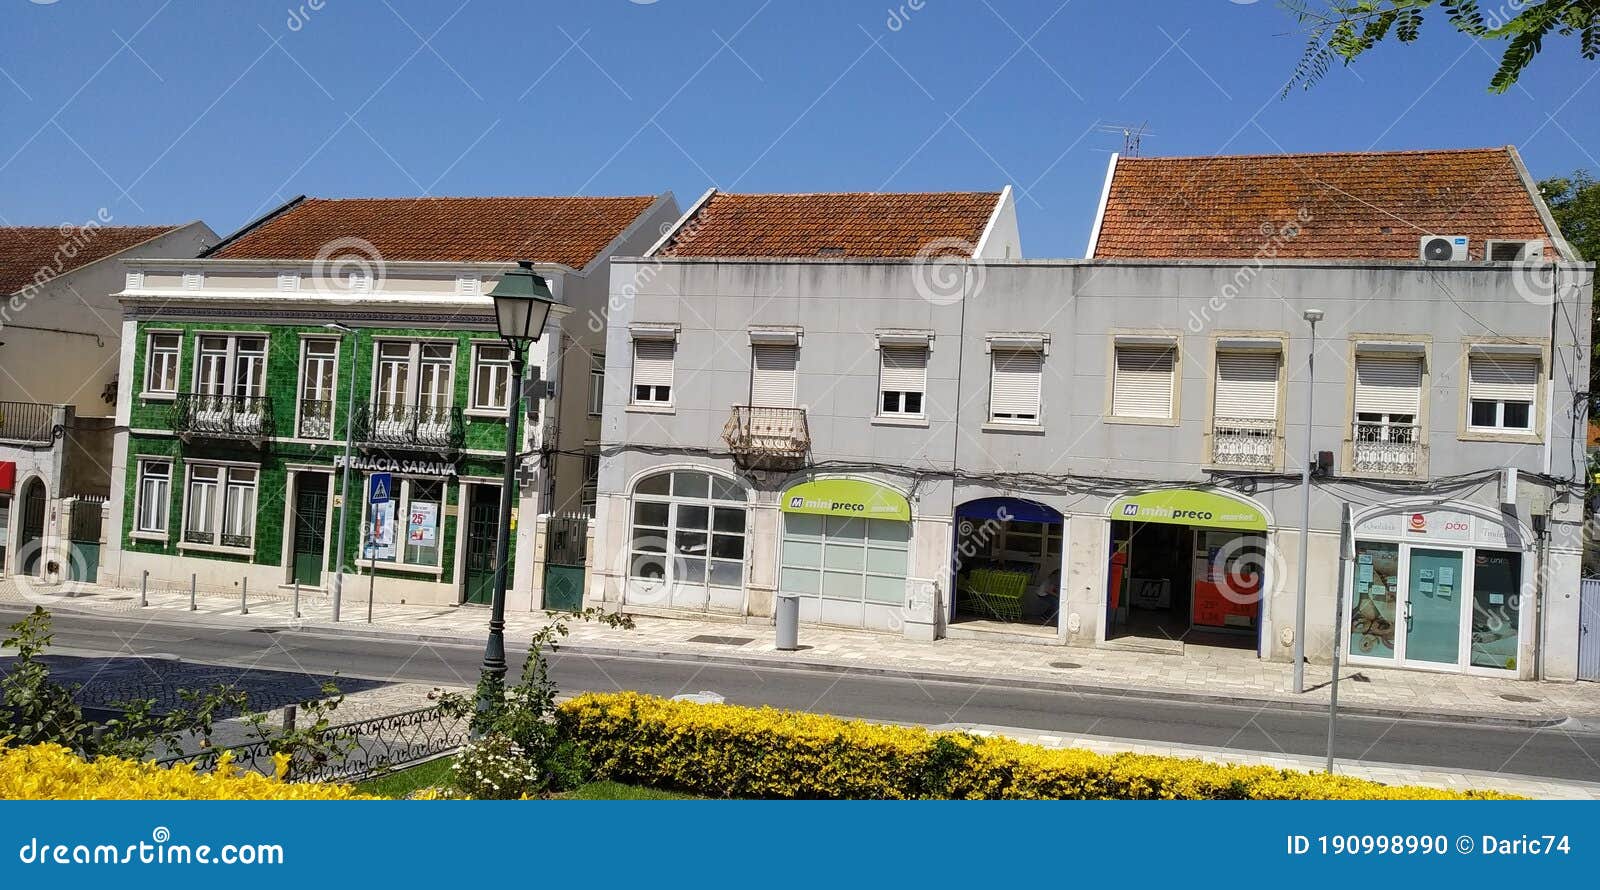 loures rua principal, portugal